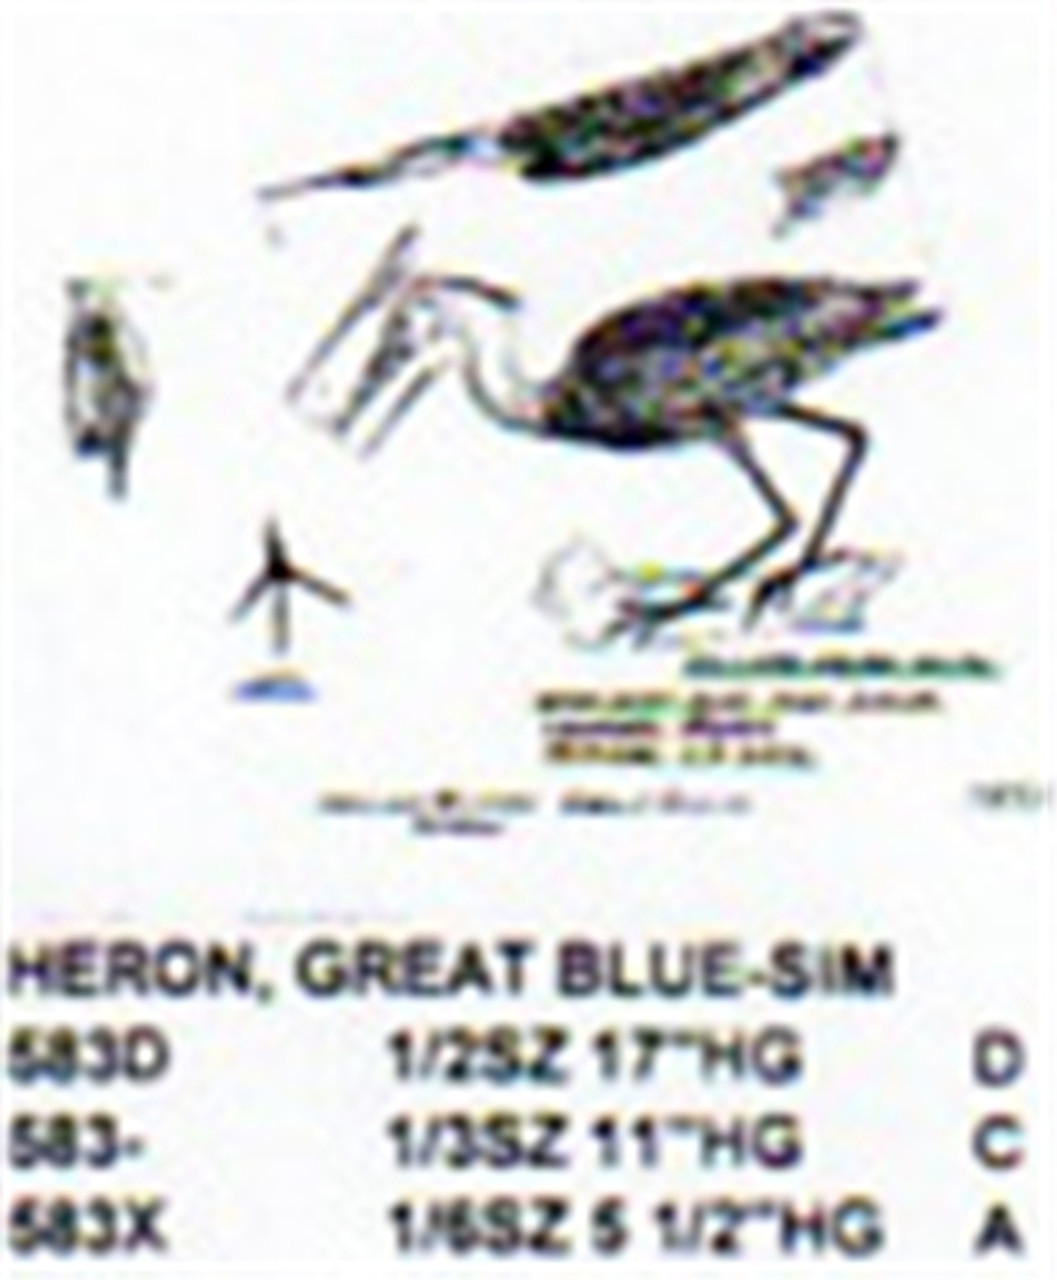 Great Blue Heron Crouching-Fishing 1/6 Size